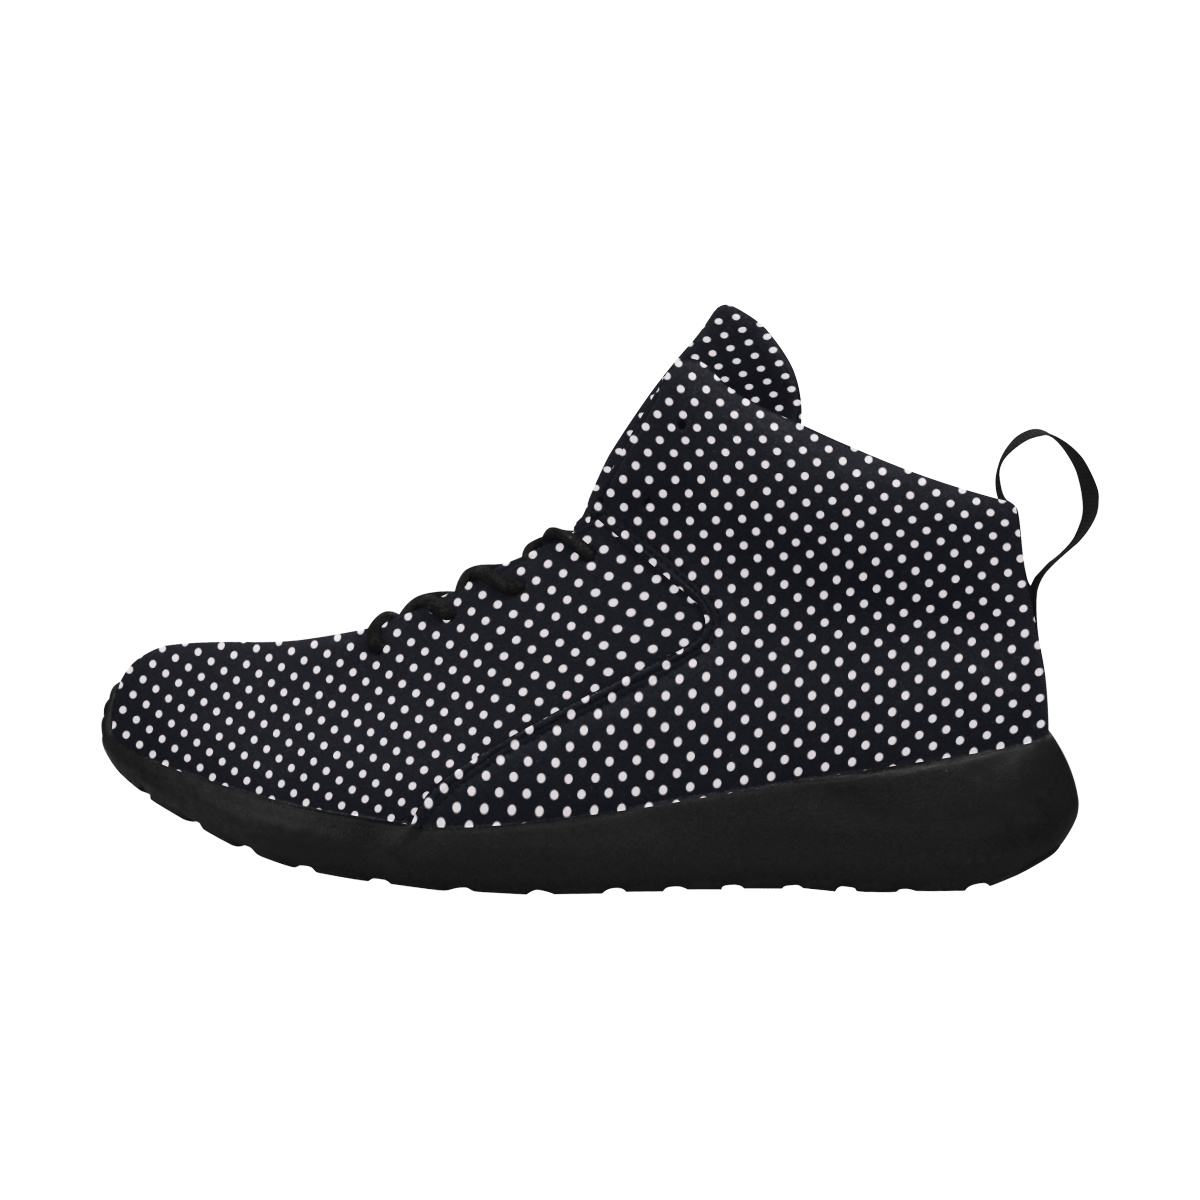 Black polka dots Women's Chukka Training Shoes/Large Size (Model 57502)